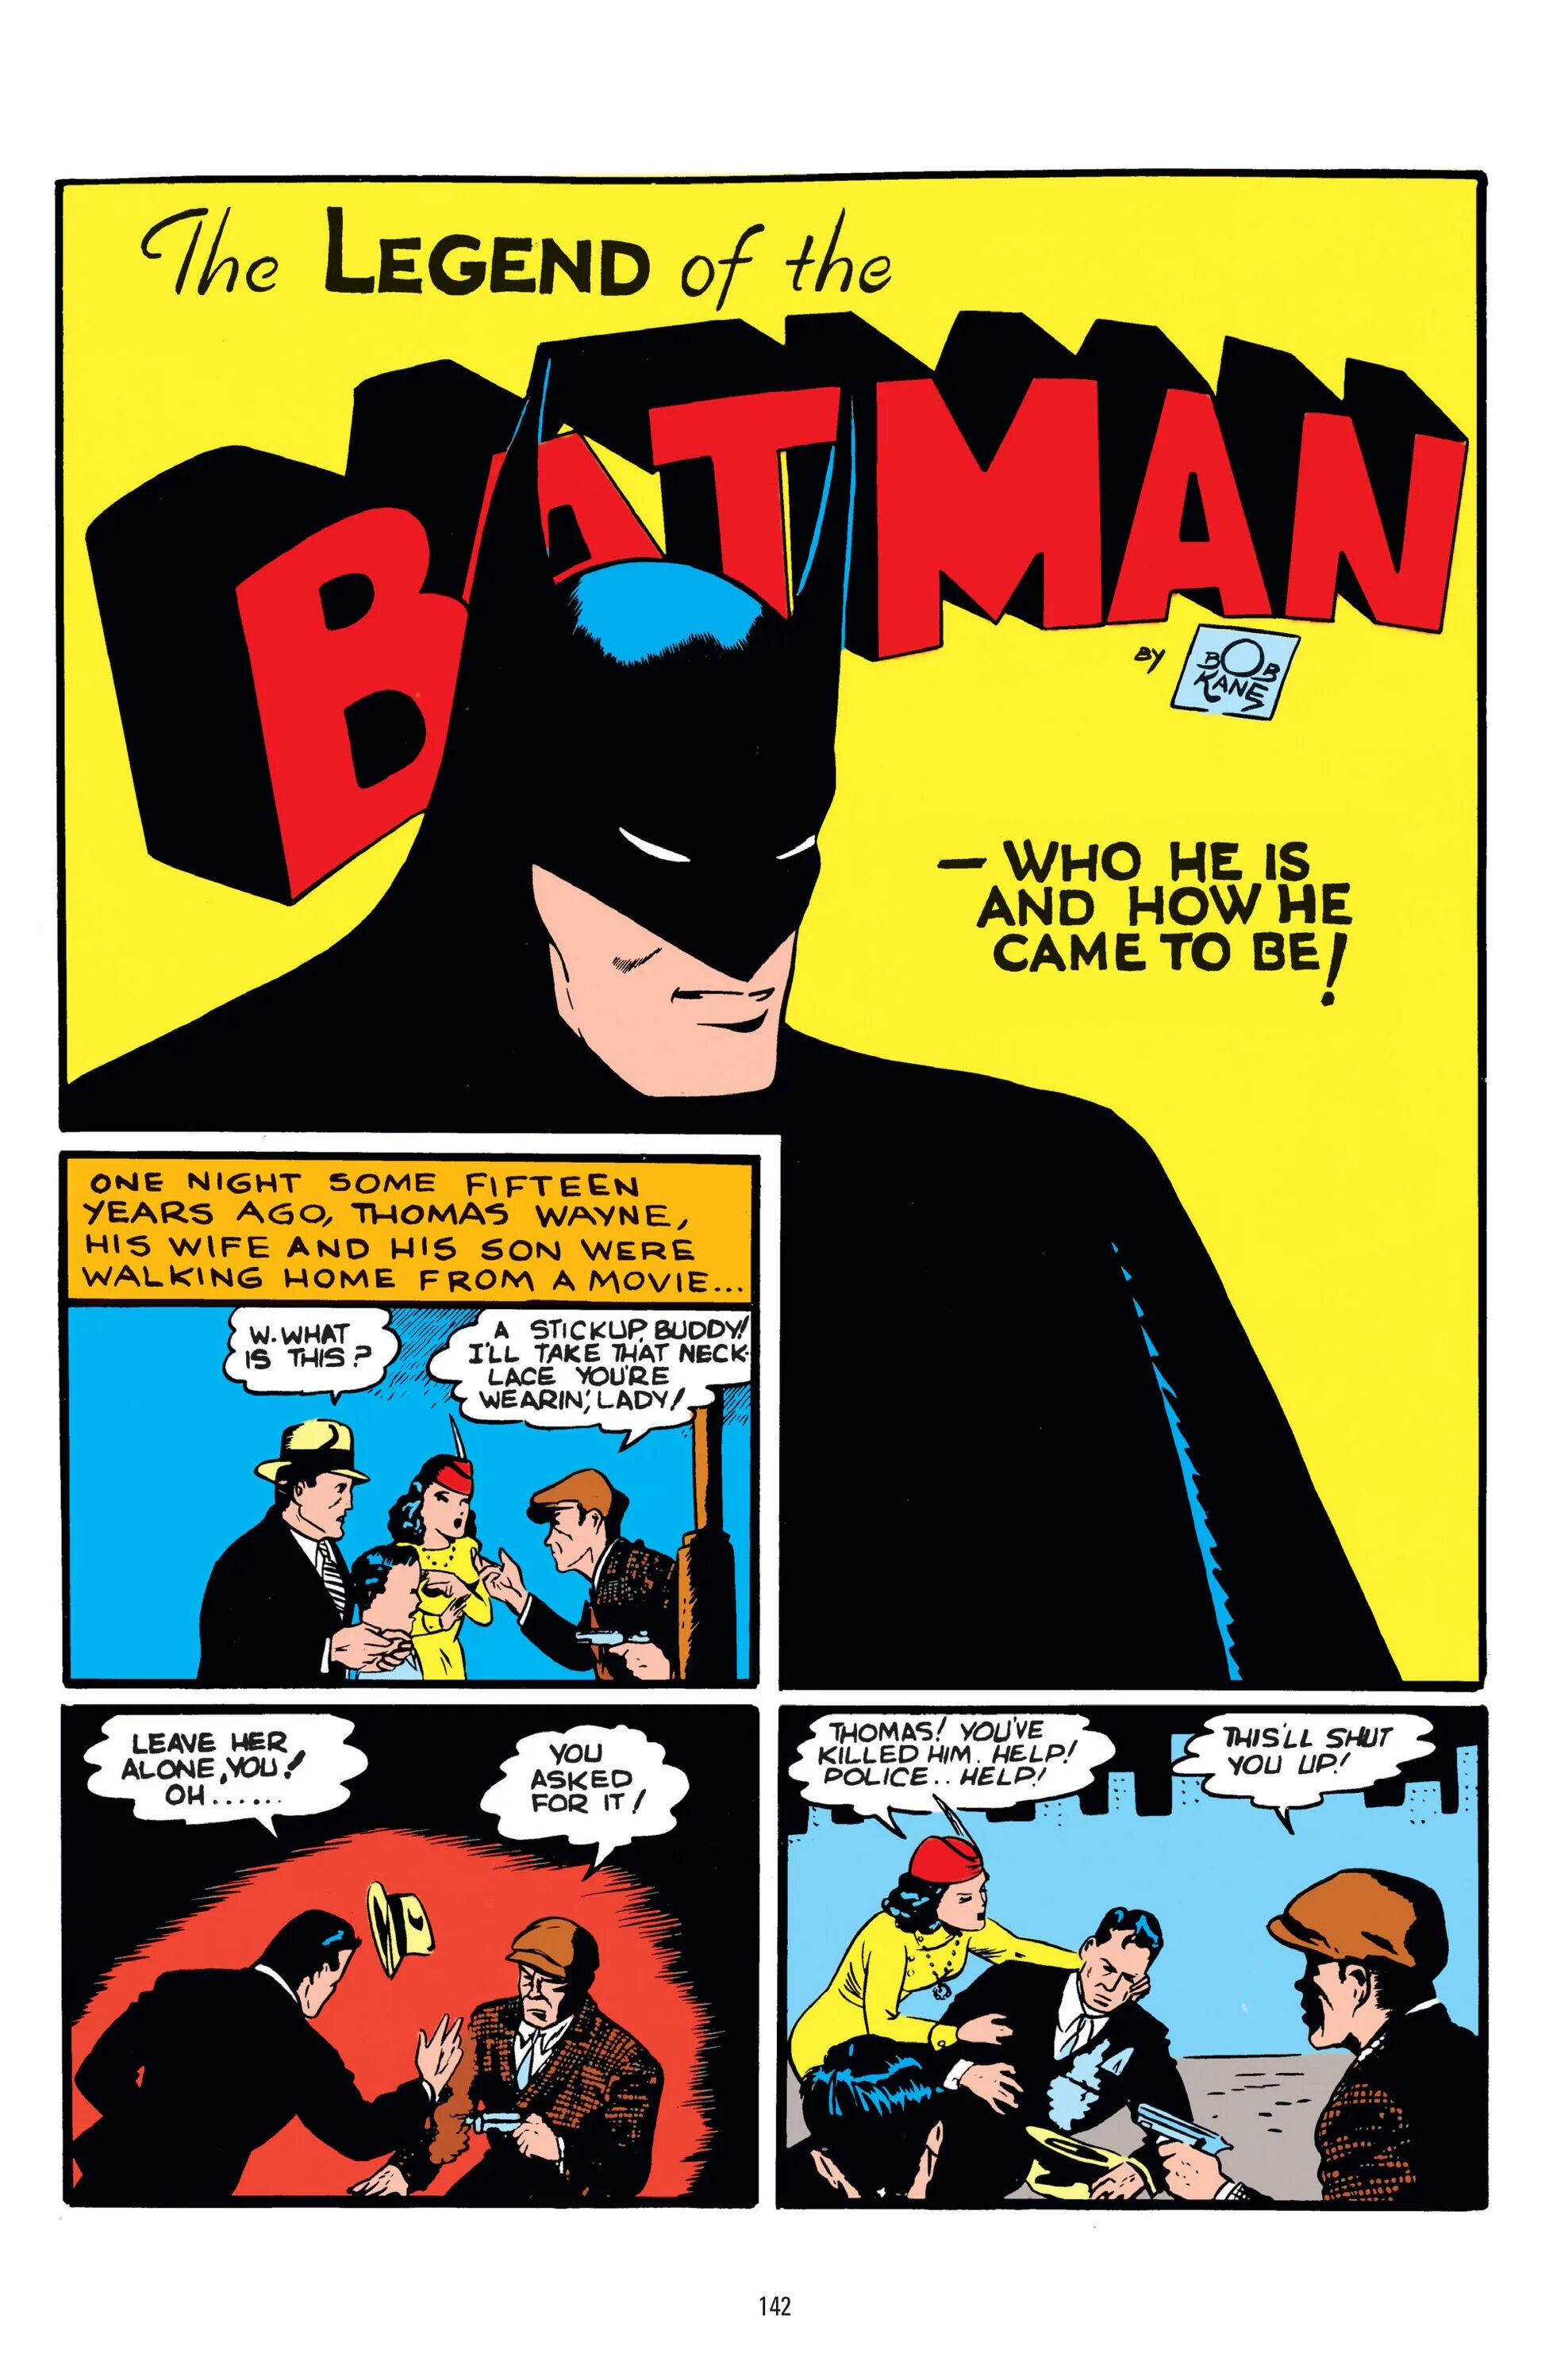 Бэтмен первые комиксы. Первый комикс про Бэтмена. Бэтмен первый комикс. Самый первый комикс про Бэтмена. Бэтмен 1940.